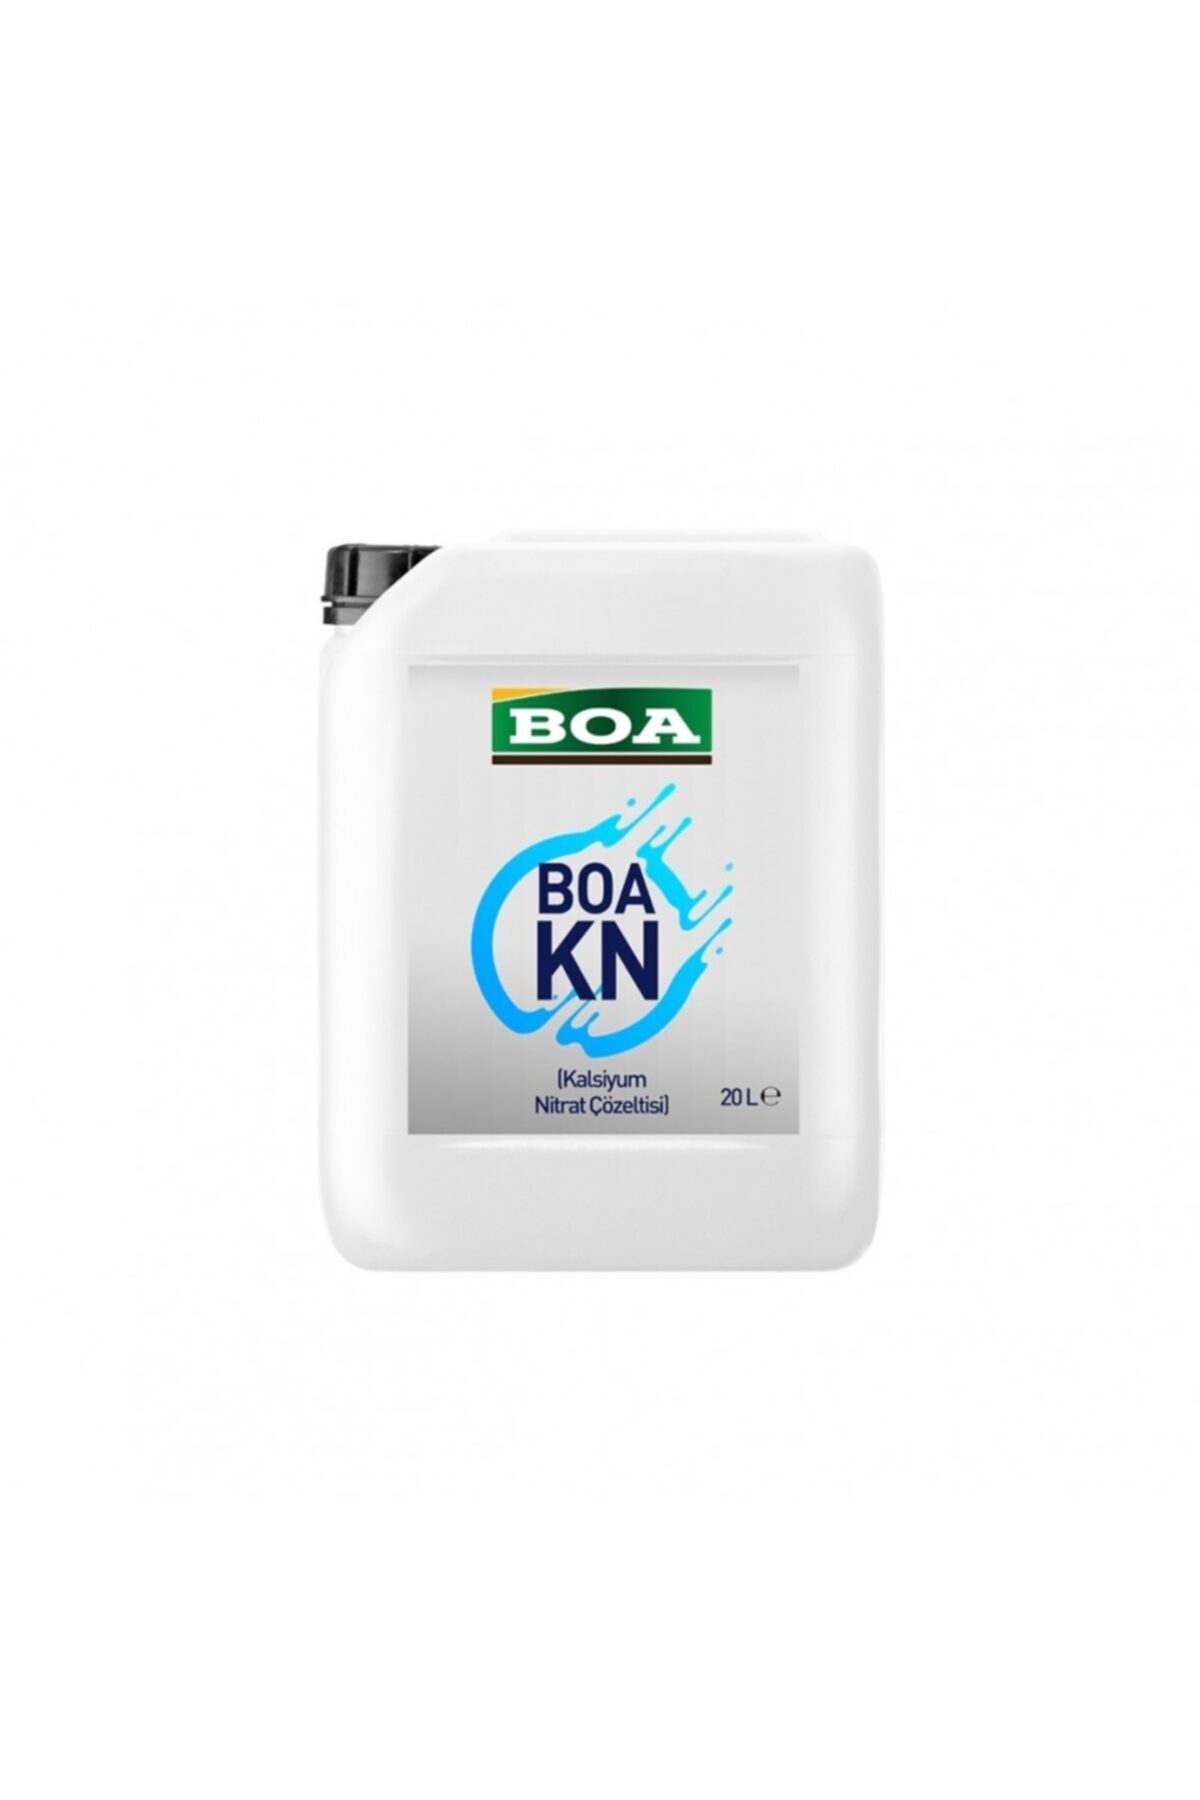 BOA Kn (sıvı Kalsiyum Nitrat)